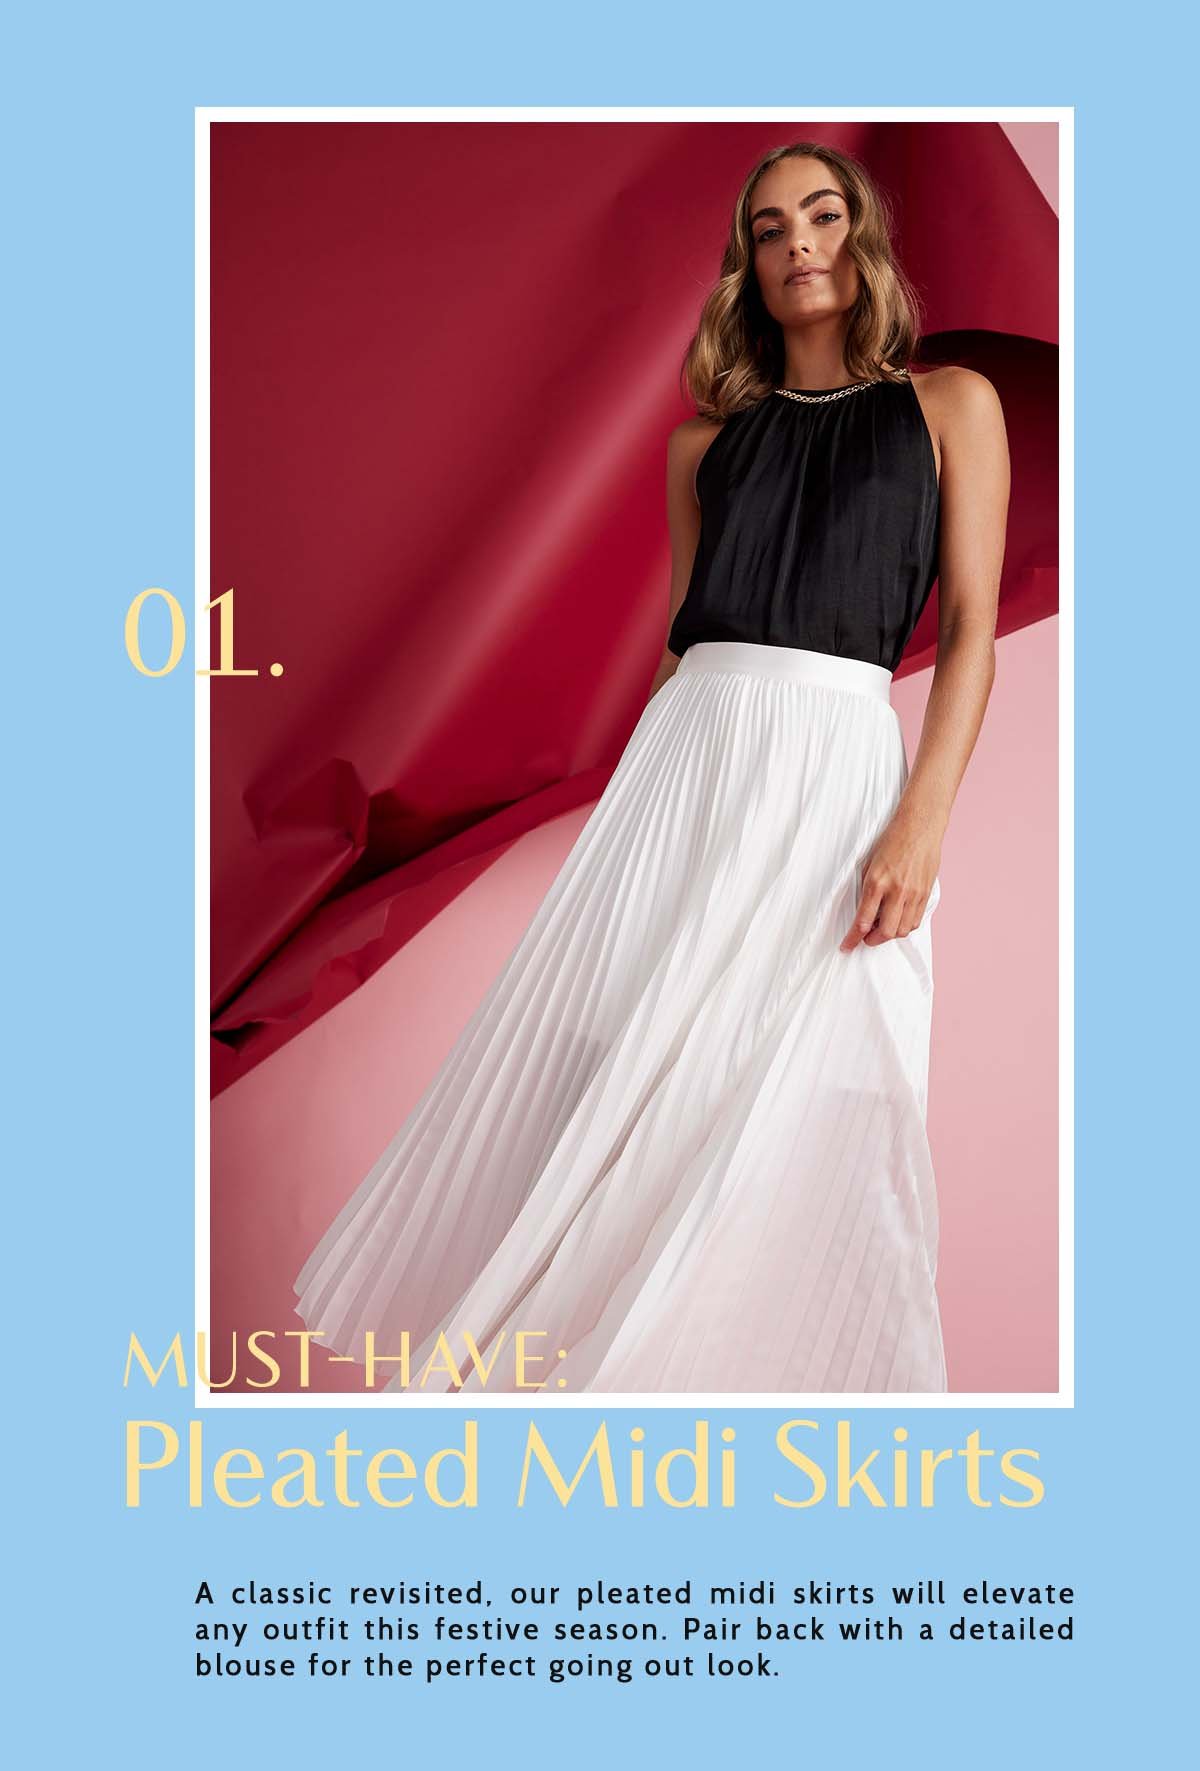 01. Must-Have: Pleasted Midi Skirts